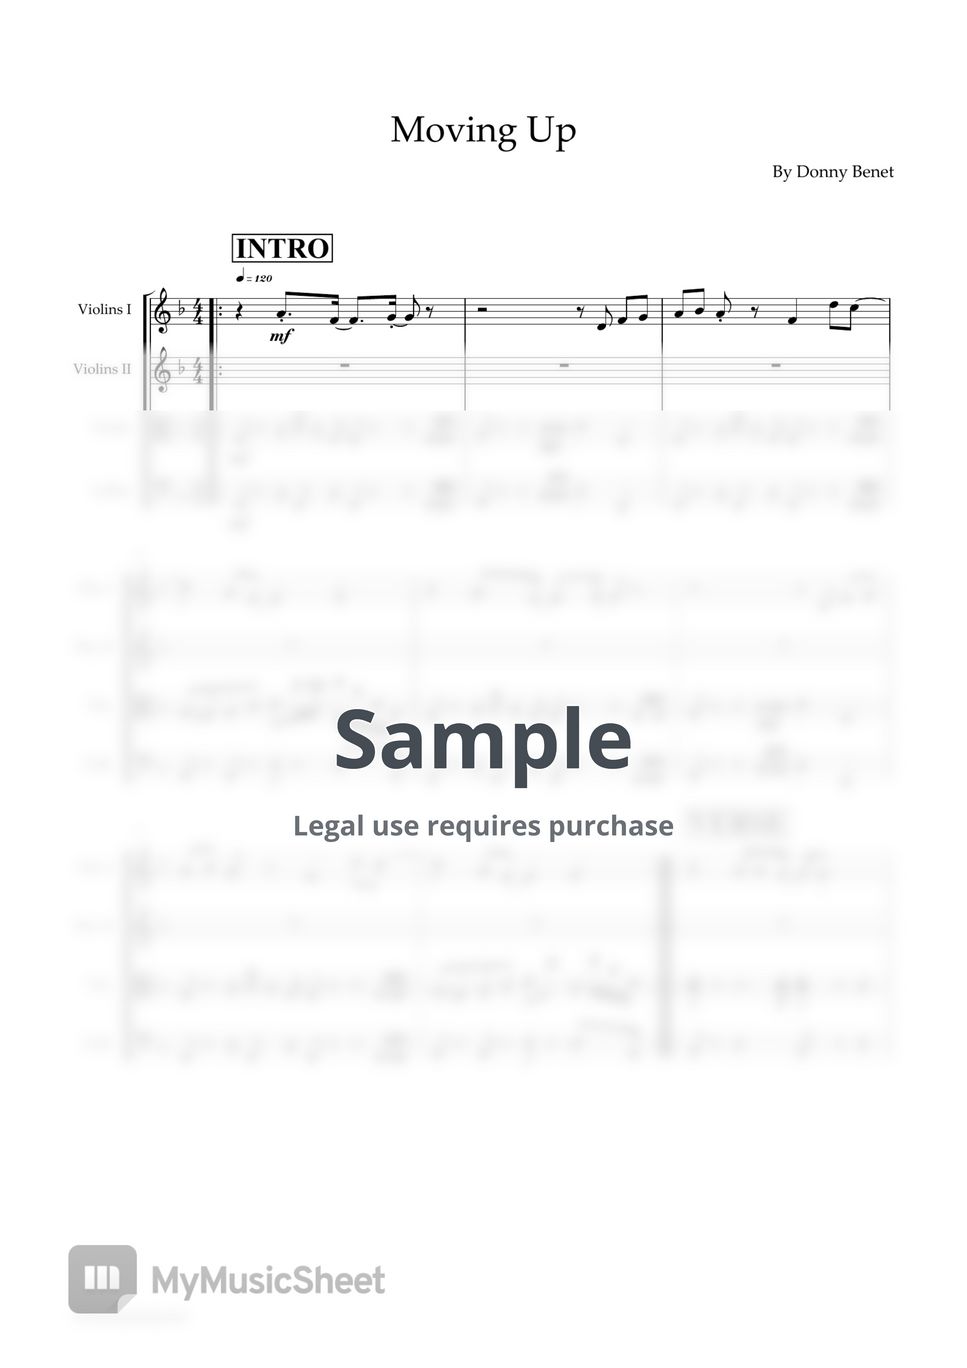 Donny Benet - Moving Up (for string quartet Score + Parts) by ScoreProduction